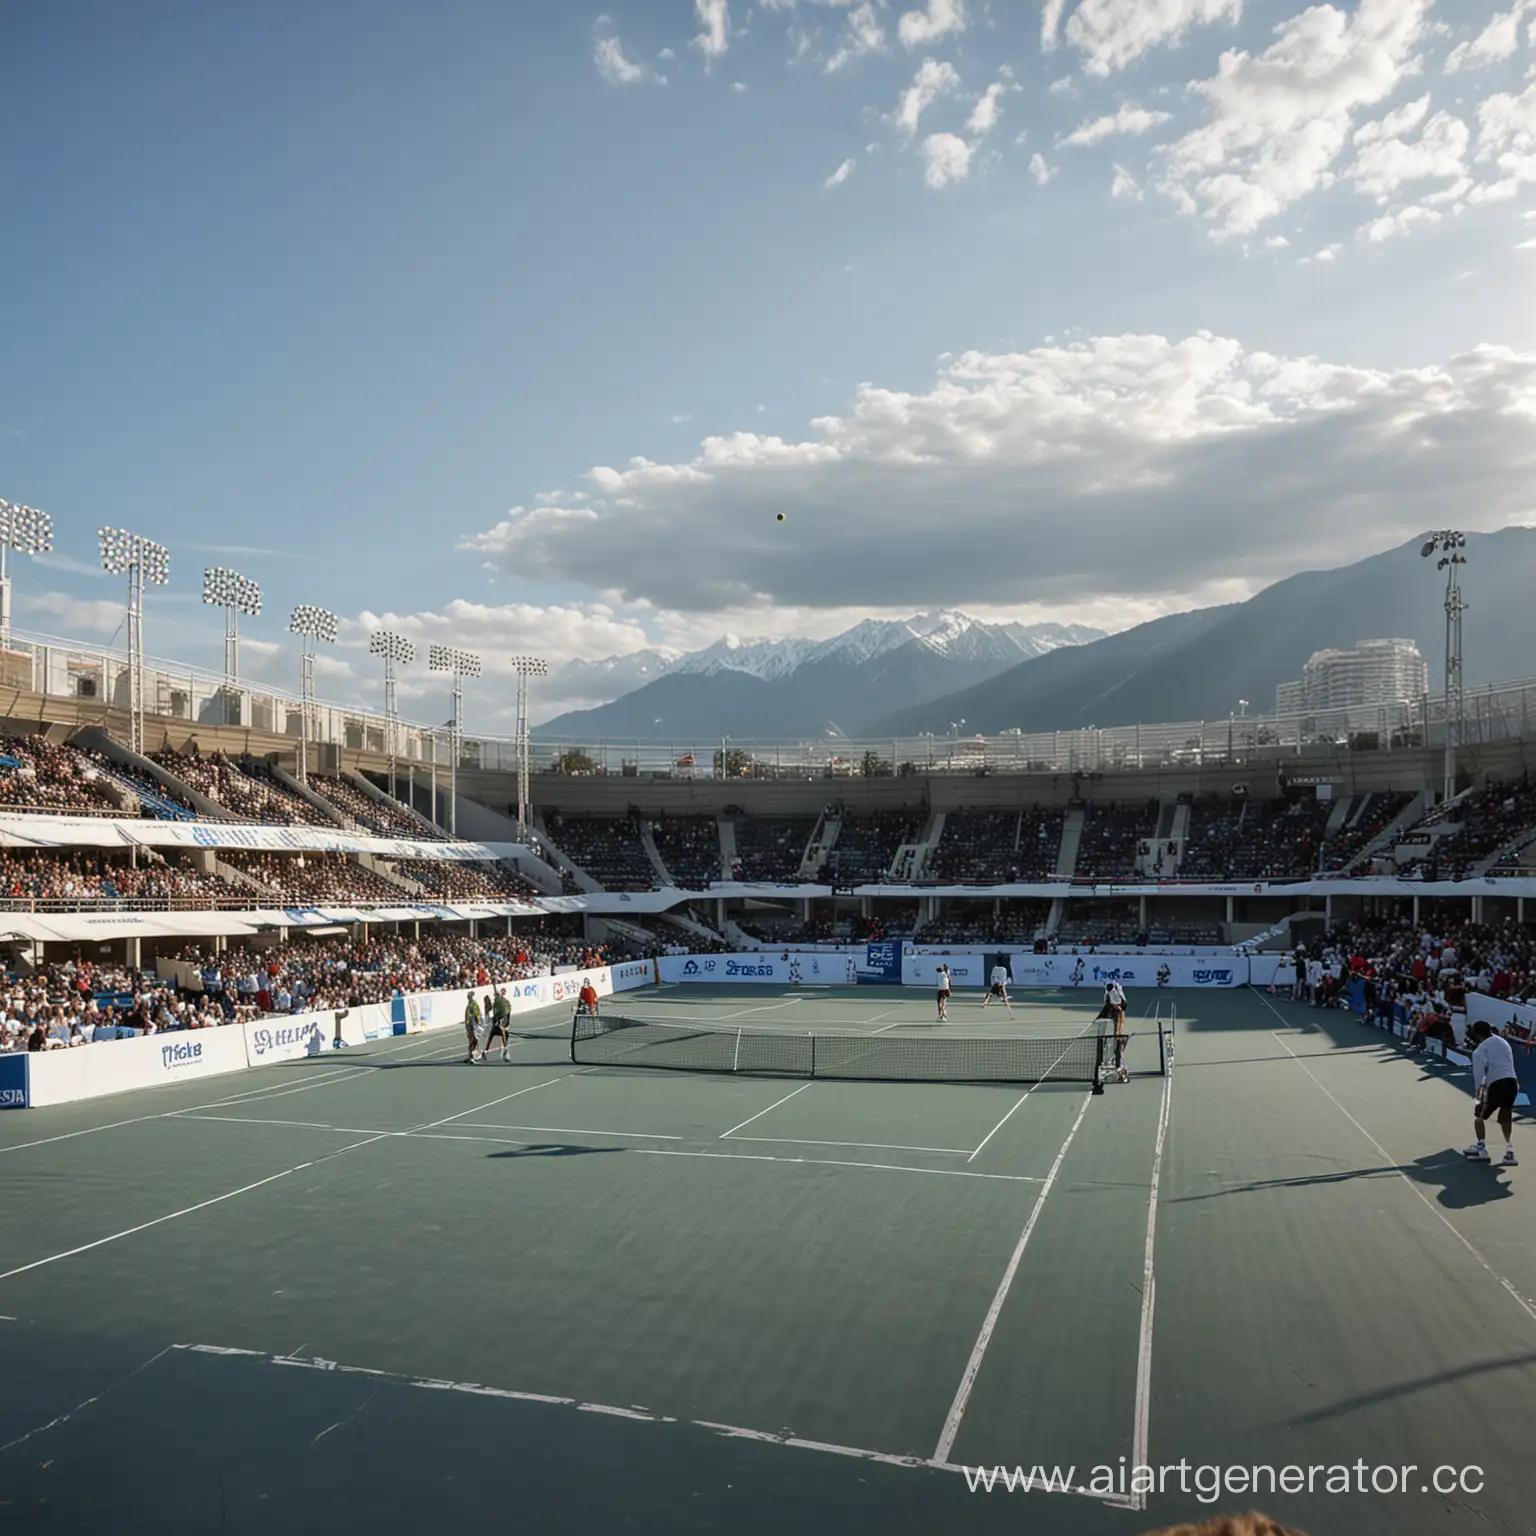 City-Tennis-Match-in-Sochi-Urban-Sporting-Event-Amidst-Skyscrapers